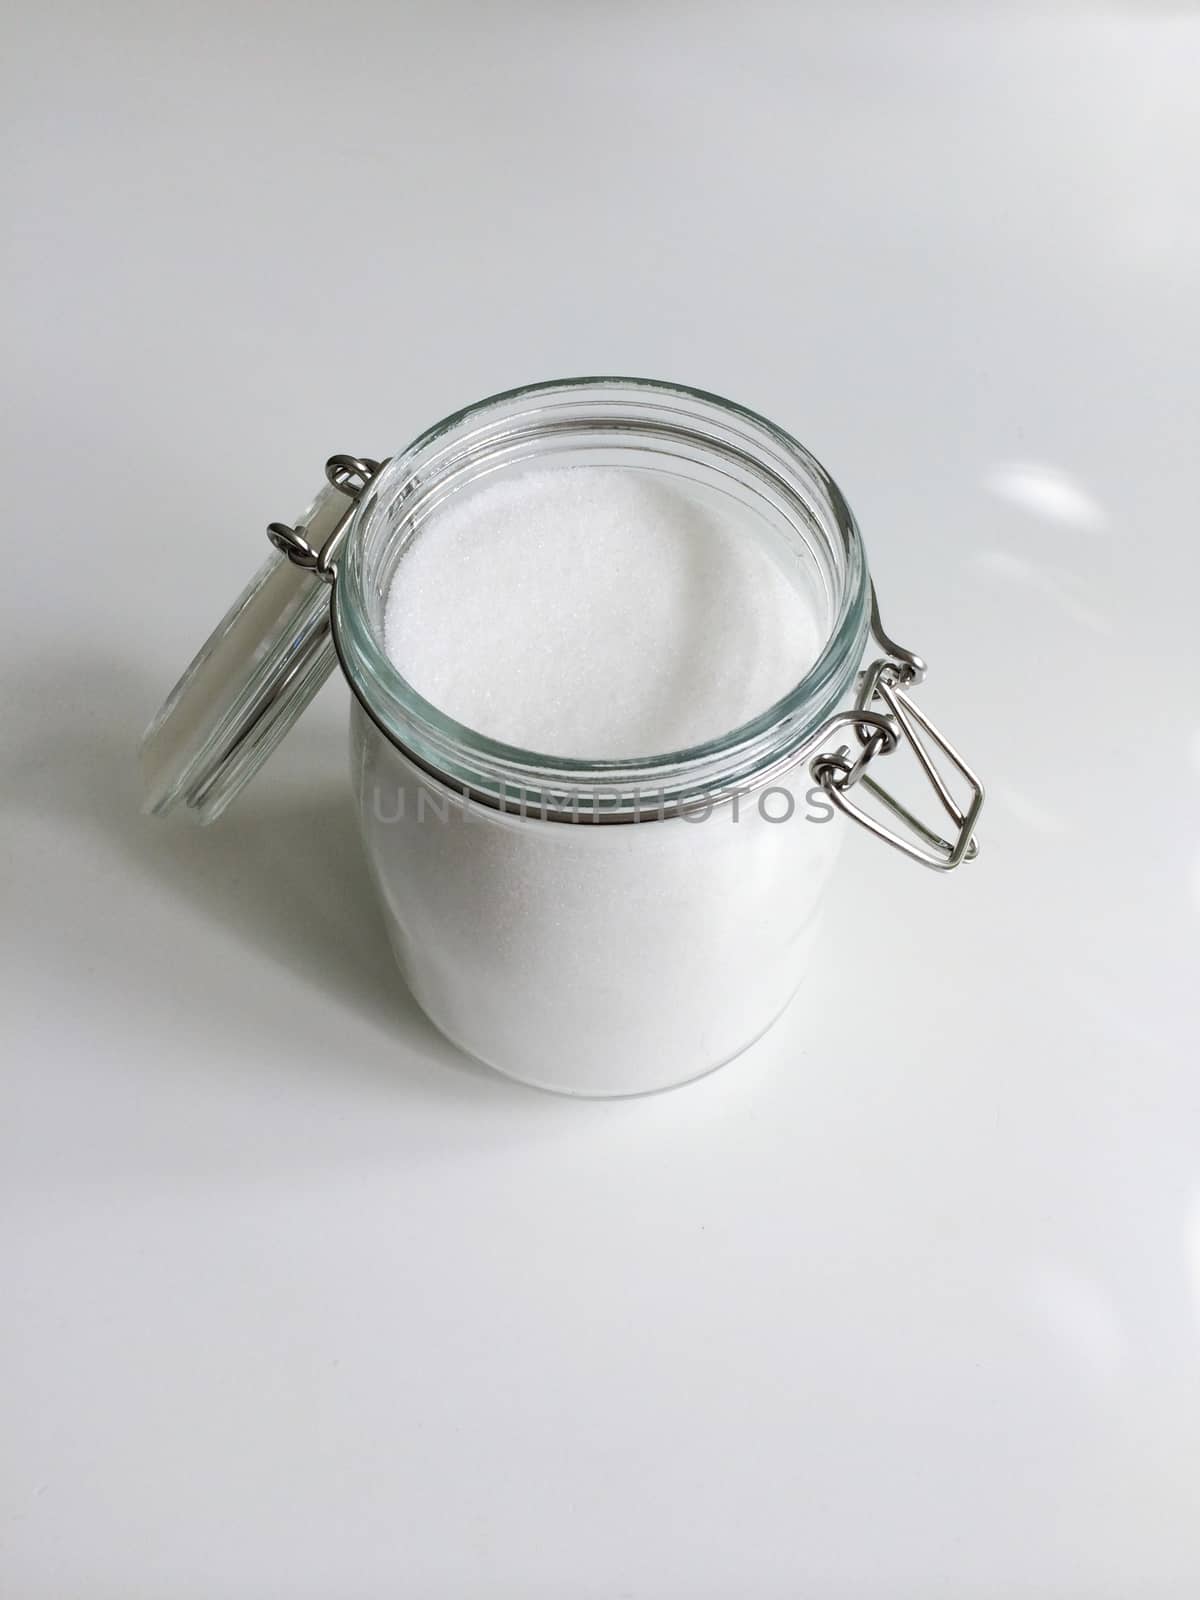 Open jar of refined granulated sugar